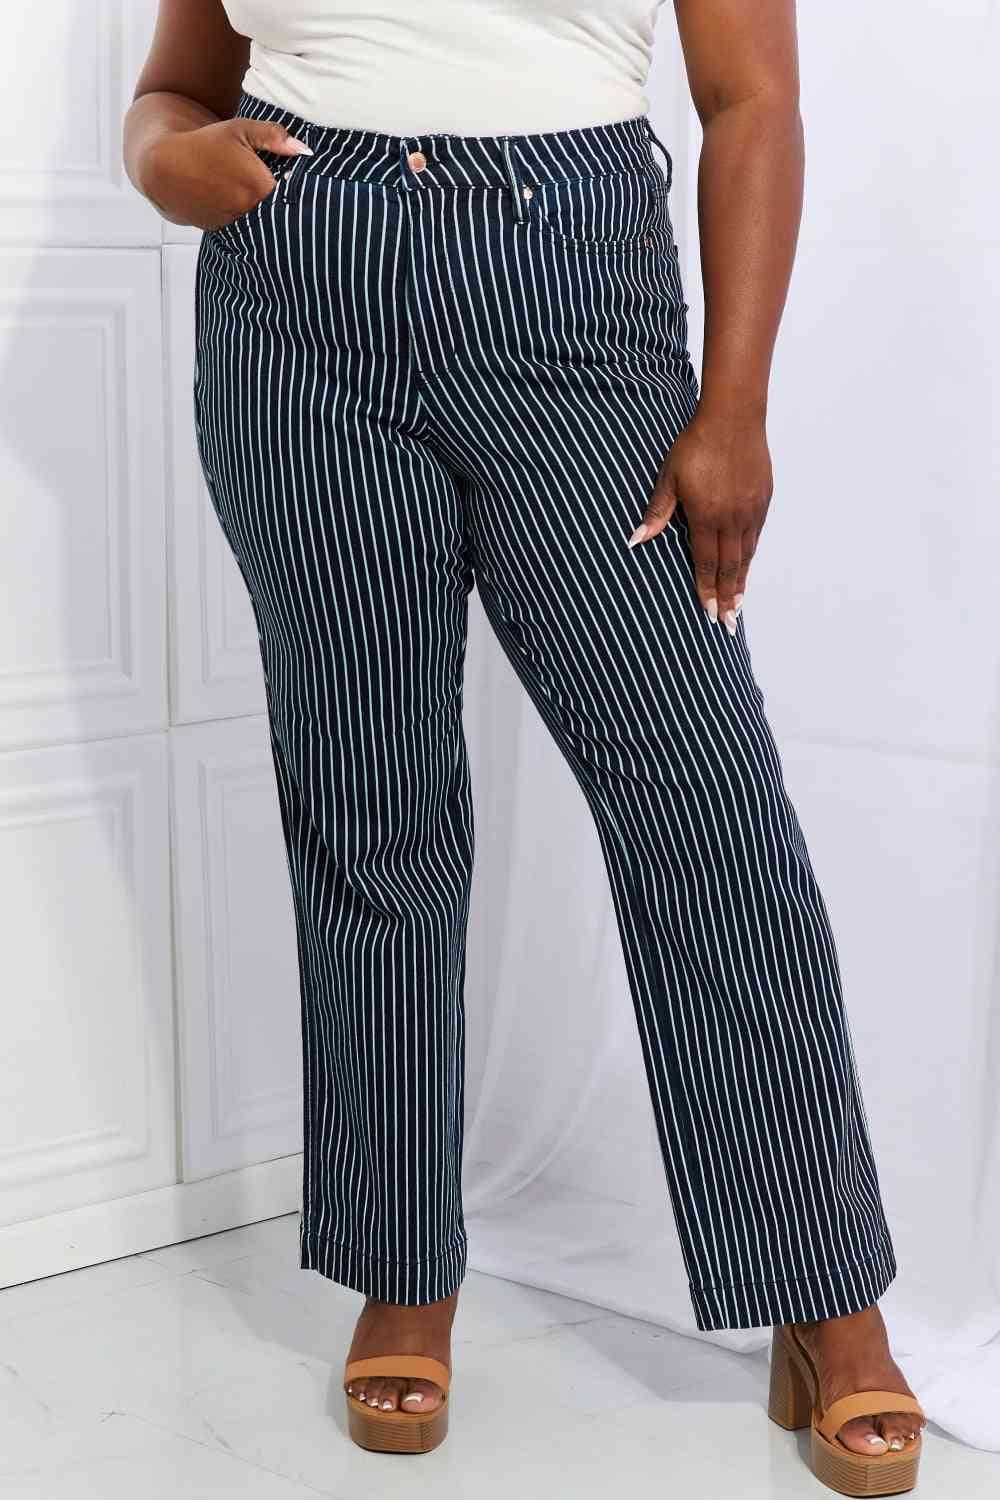 Bona Fide Fashion - Full Size High Waisted Tummy Control Striped Straight Jeans - Women Fashion - Bona Fide Fashion